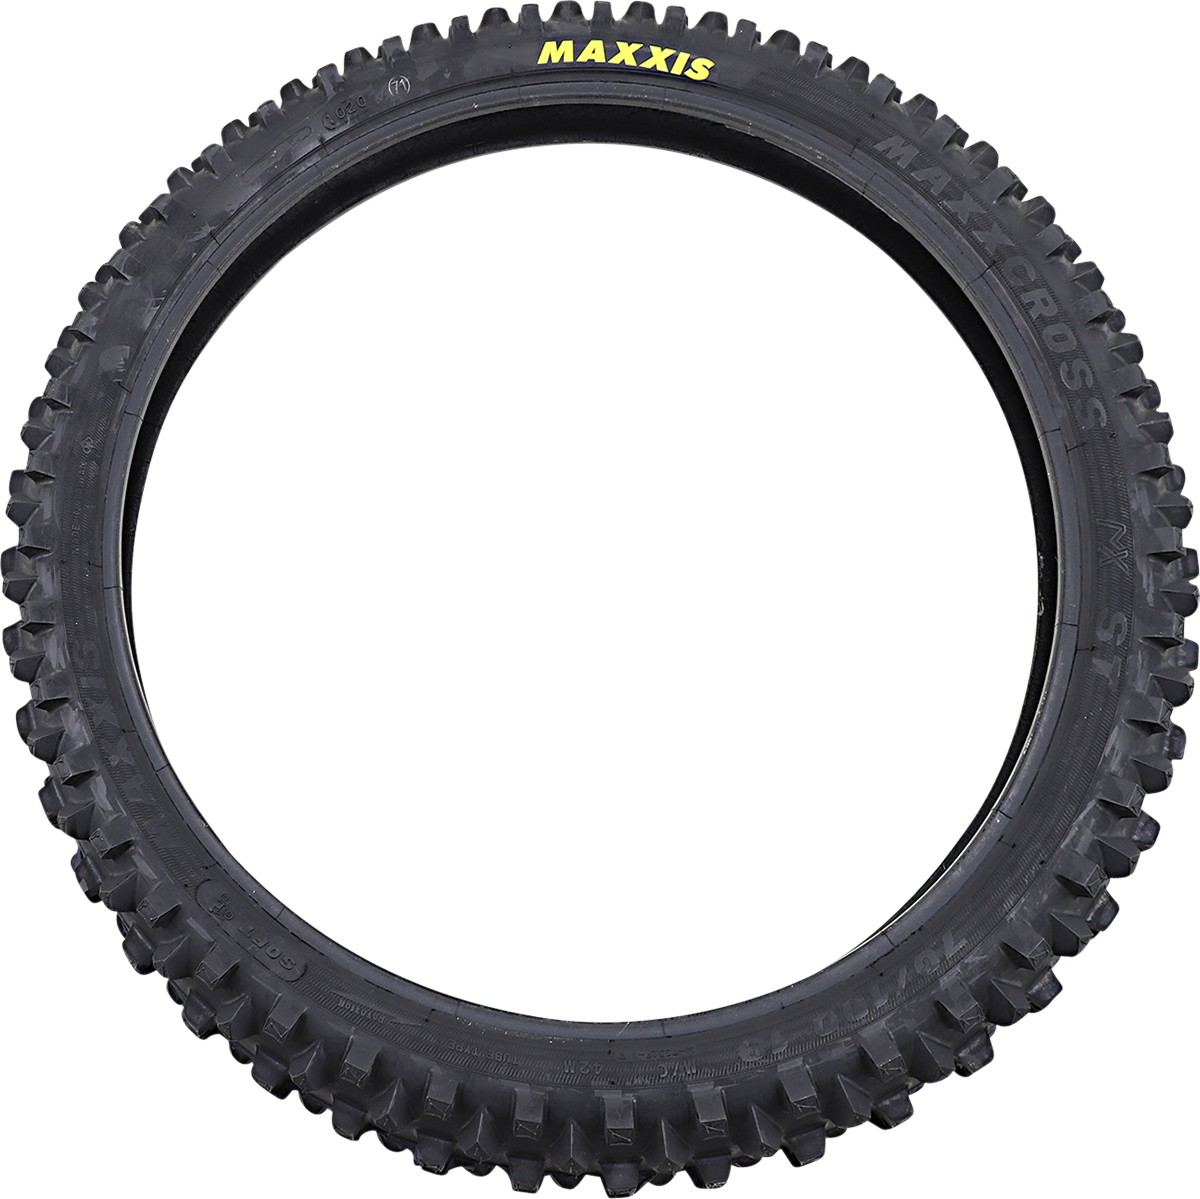 Tire - Maxxcross MX-ST M7332 - Front - 70/100-19 - 42M